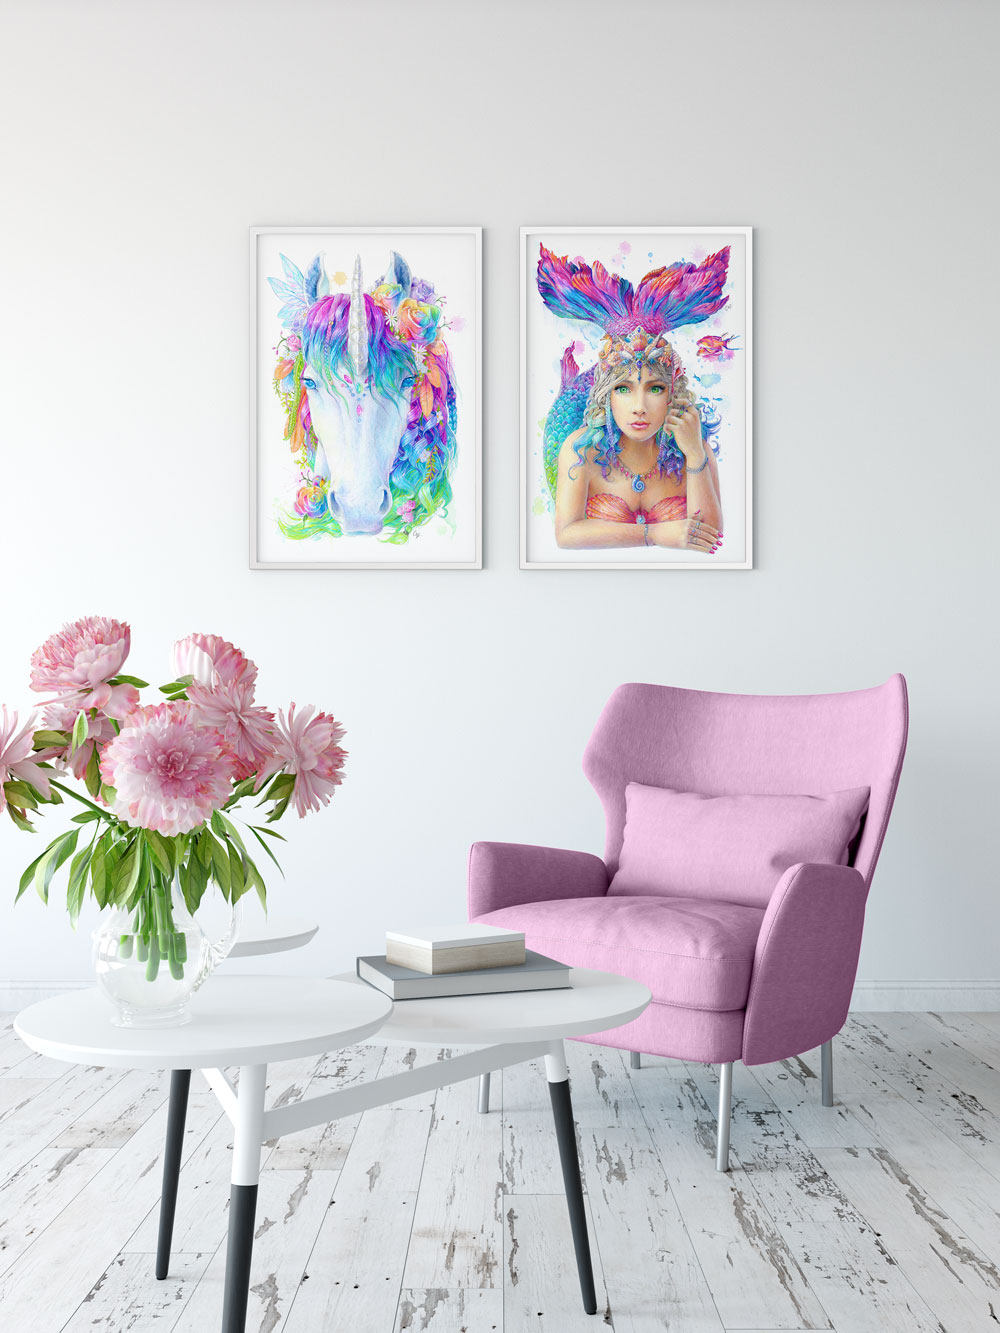 Mermaid Art Print - Mystic Series